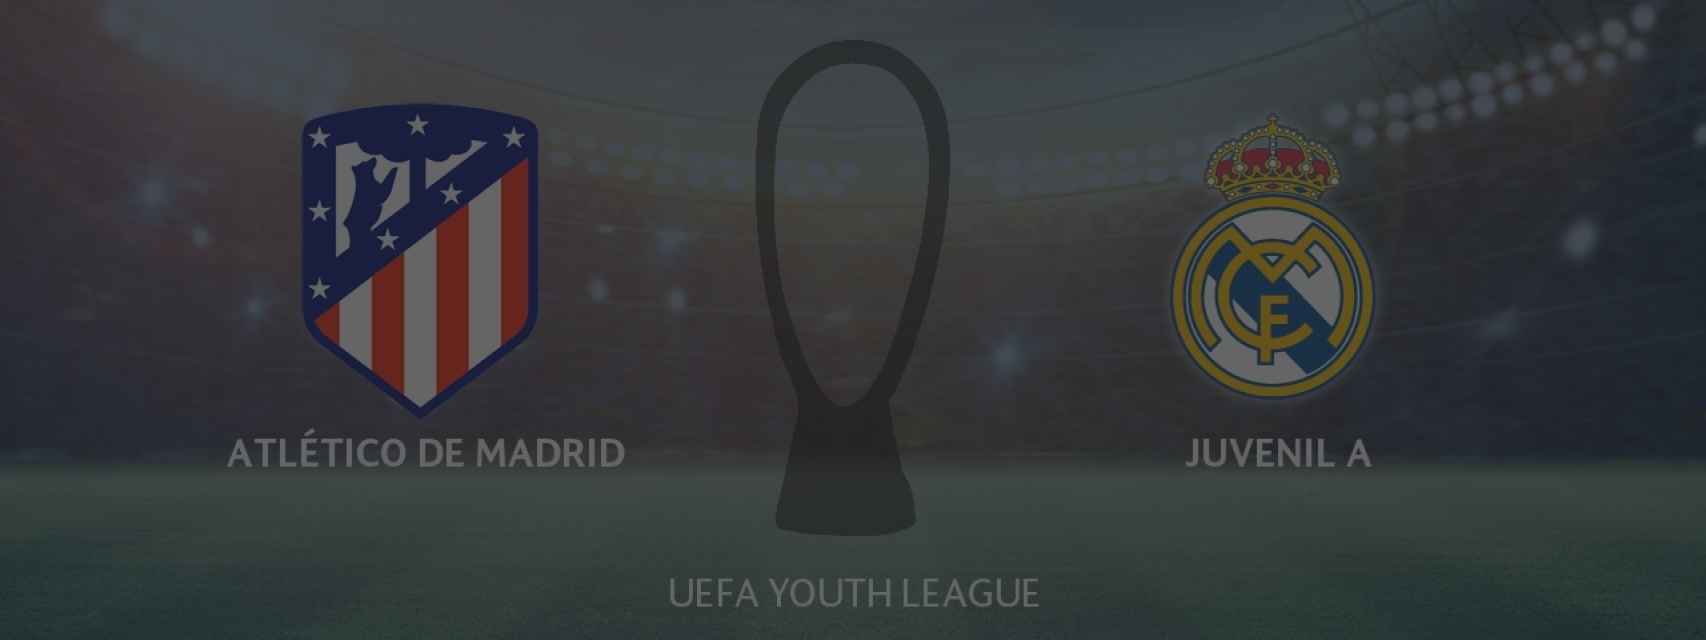 Atlético de Madrid - Real Madrid Juvenil A